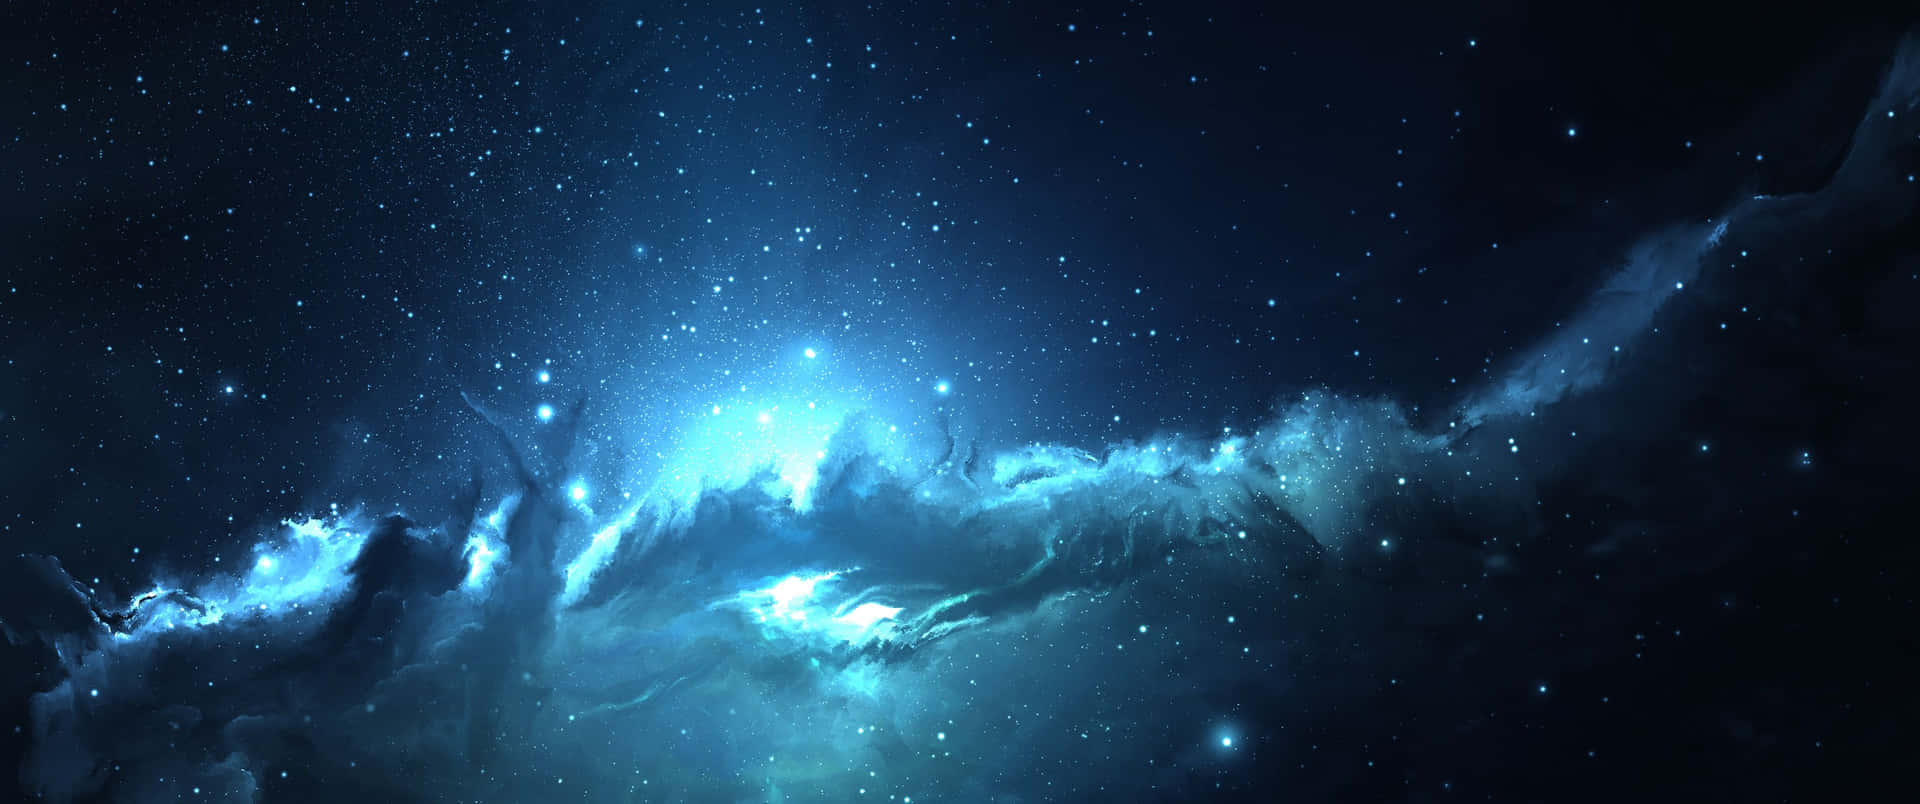 Fondode Pantalla De Nubes Nebulosas Azules De 3440x1440p